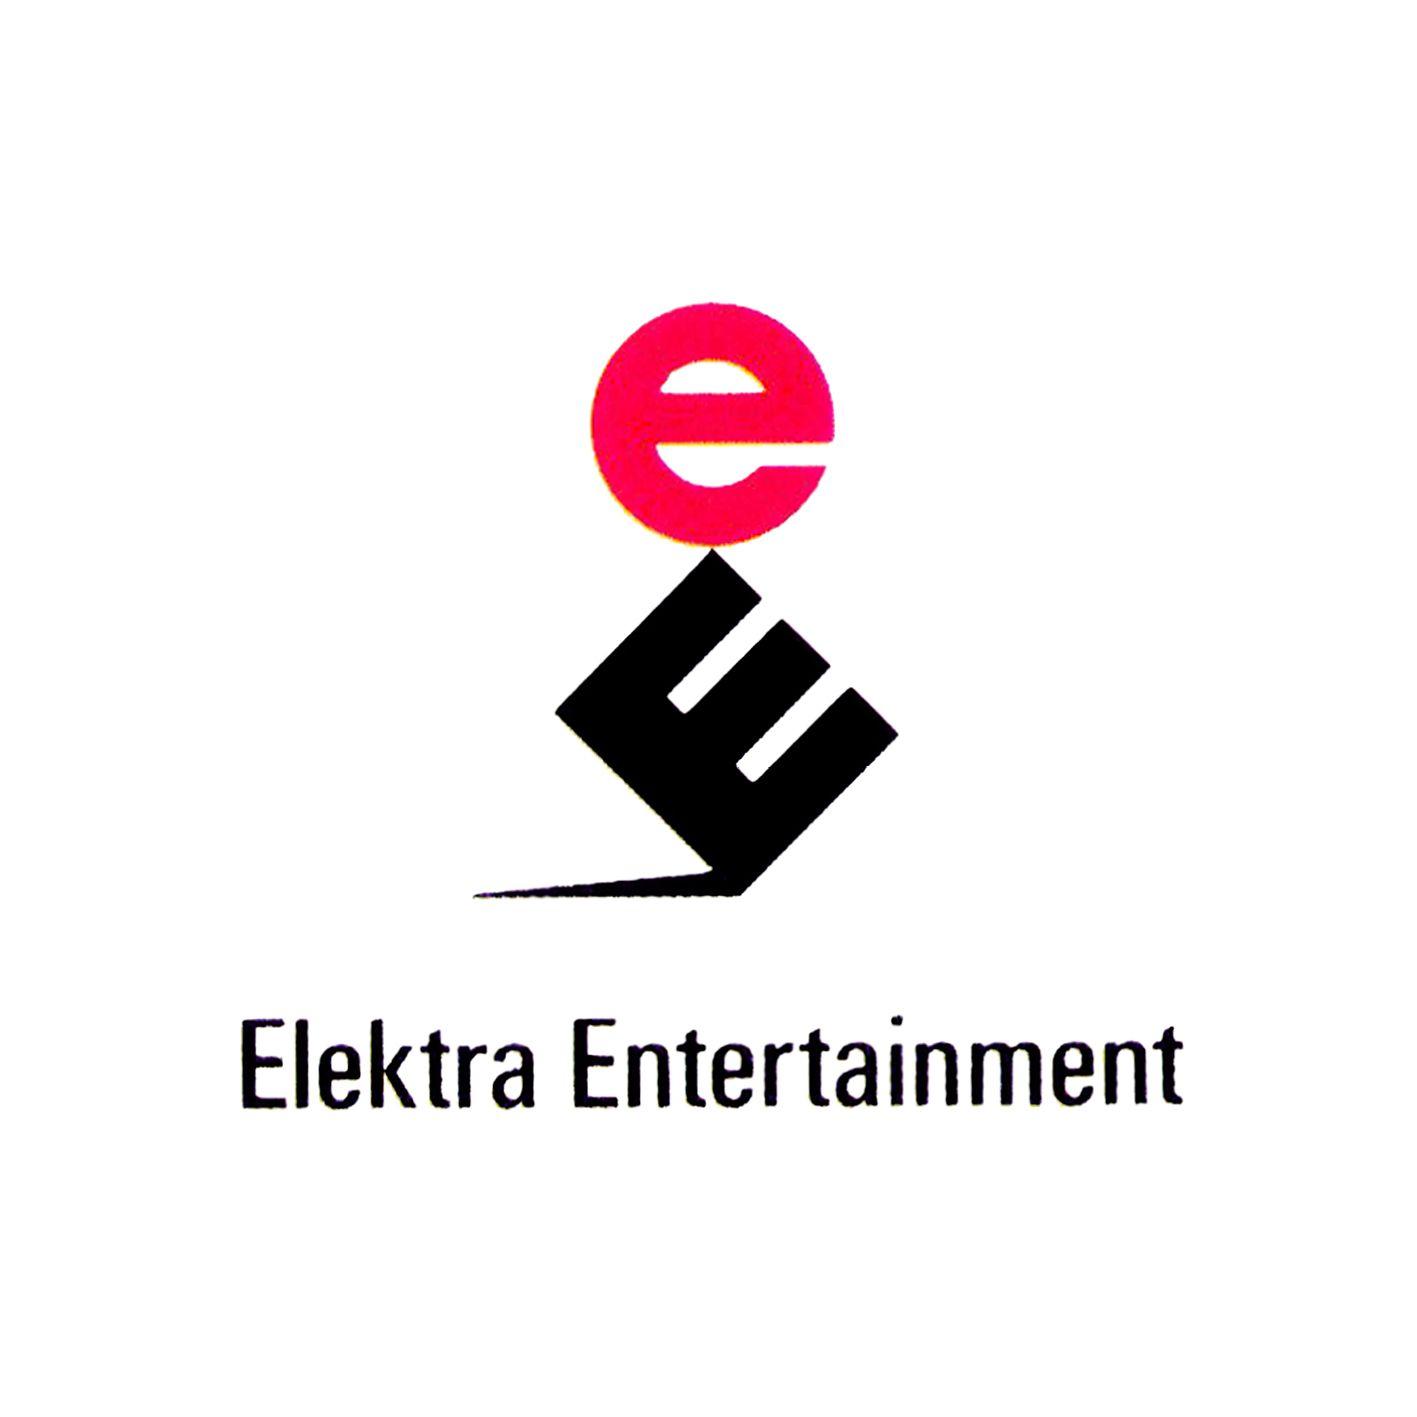 Elektra Logo - Elektra Entertainment Logo